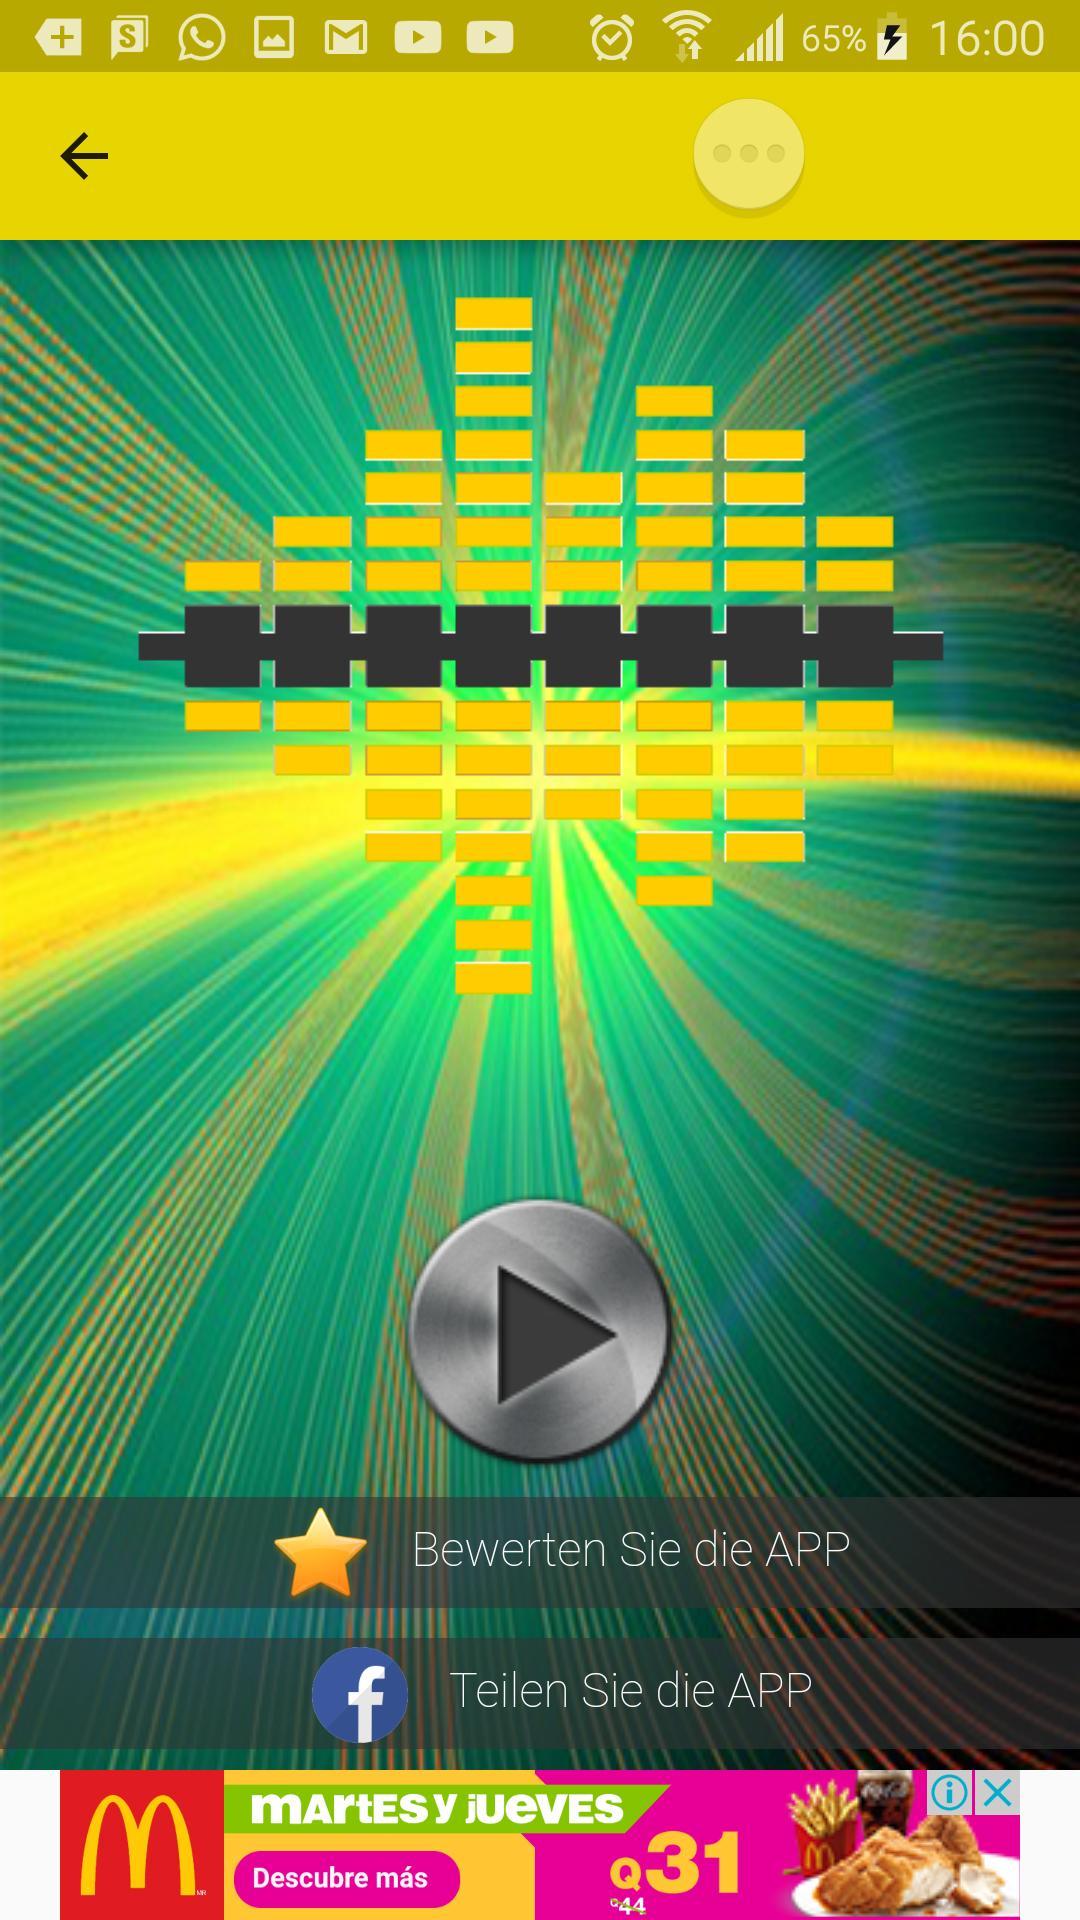 Radio Ffh Hit Radio Ffh Radio Online Ffh Rock FM for Android - APK Download